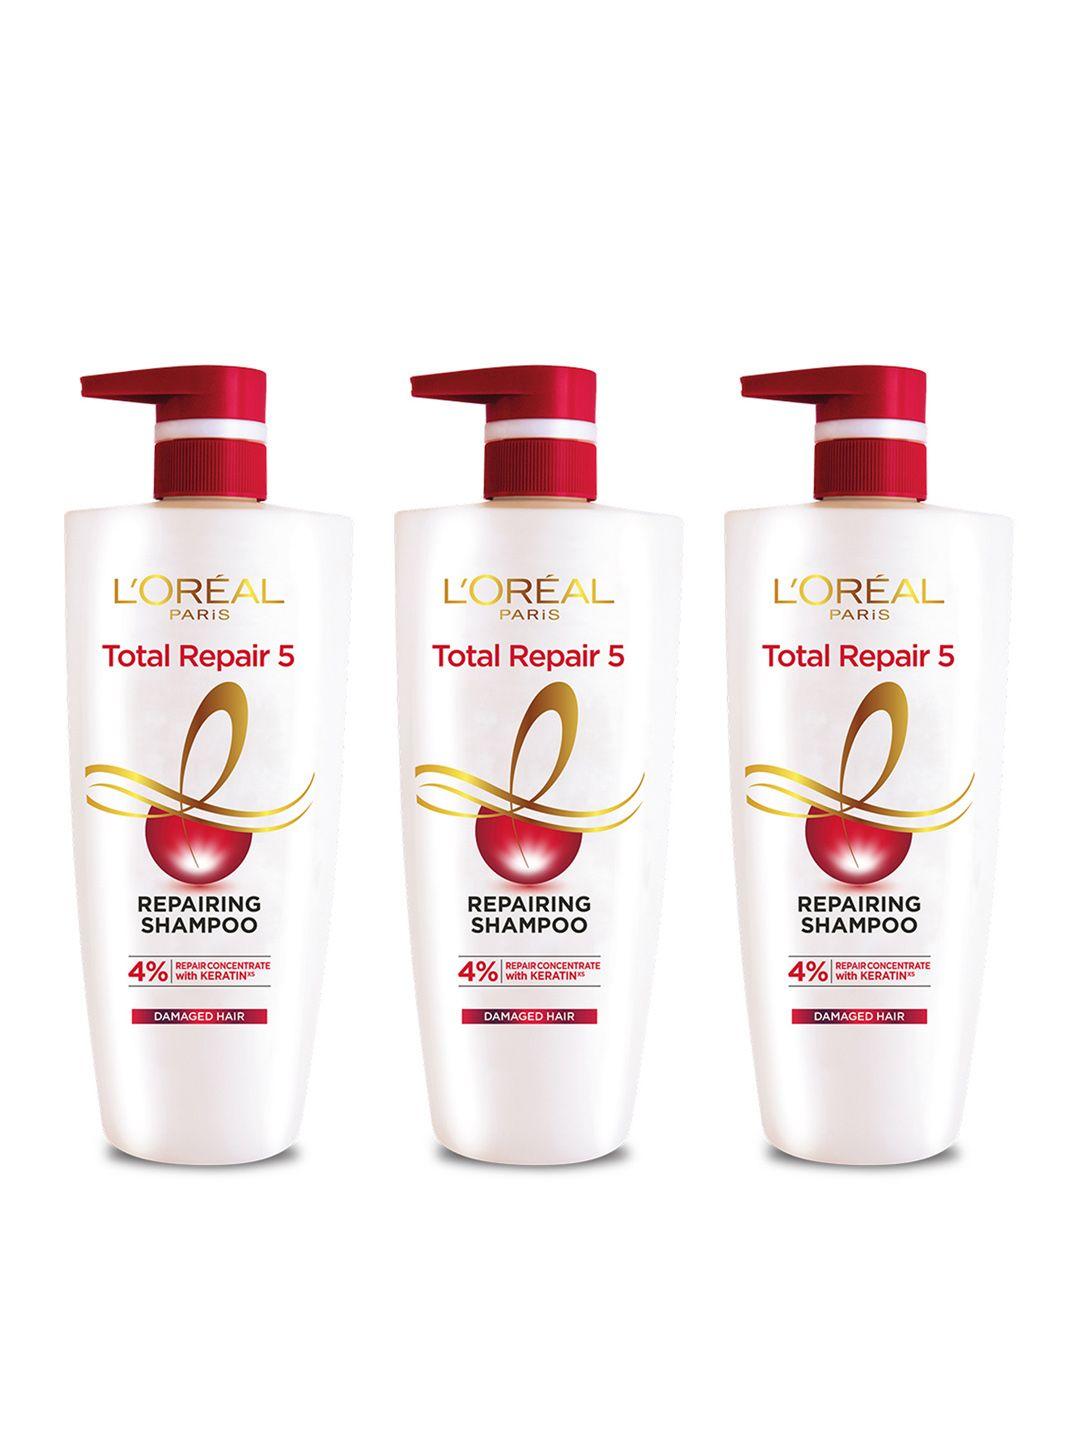 loreal paris set of 3 total repair 5 advanced repairing shampoos - 640 ml each